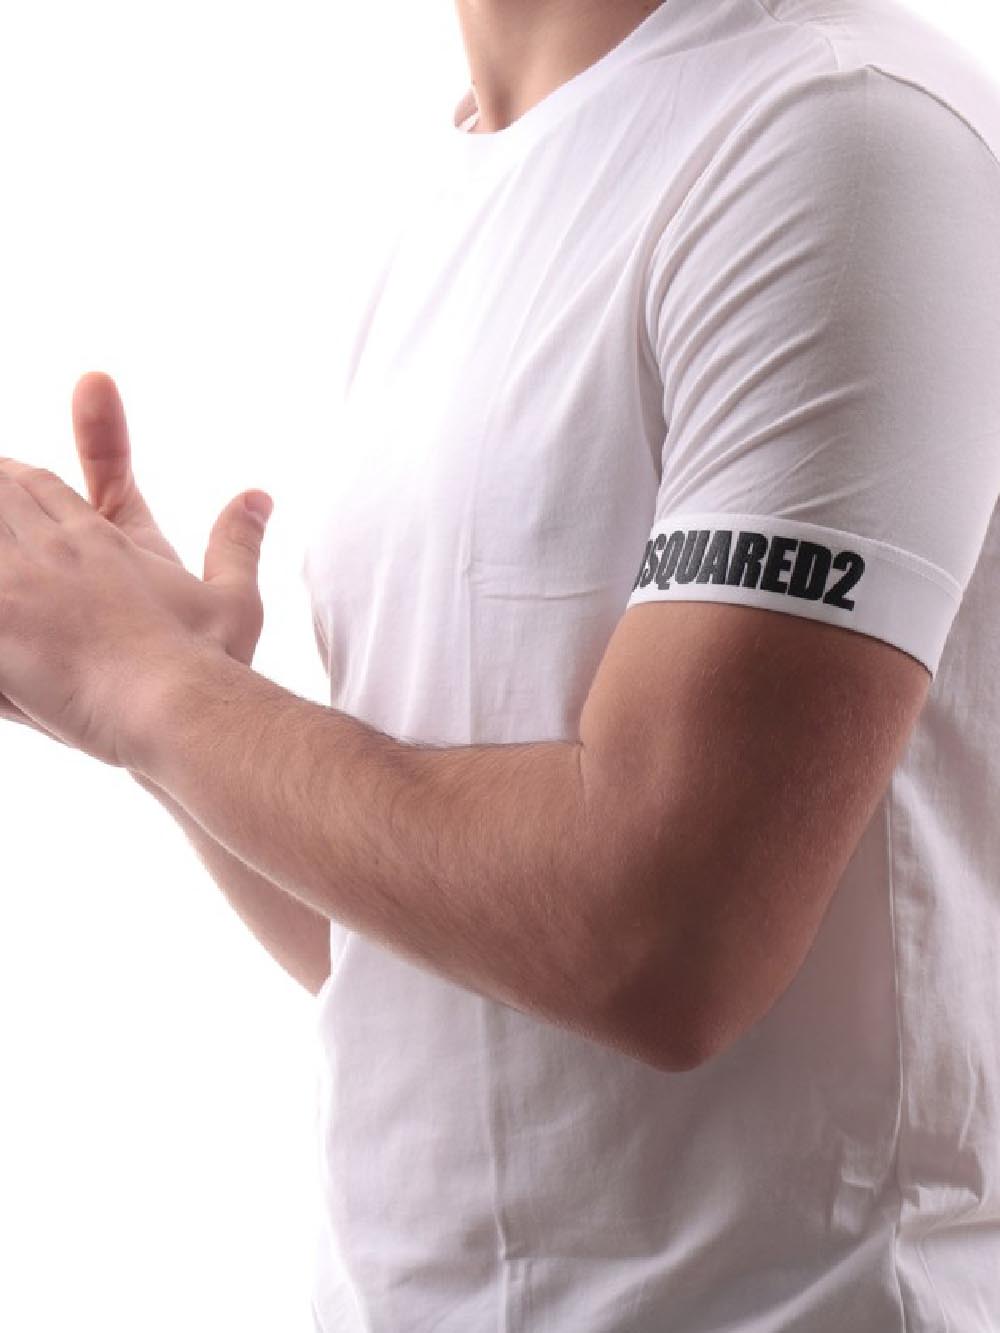 DSQUARED2 T-shirt Uomo Bianco